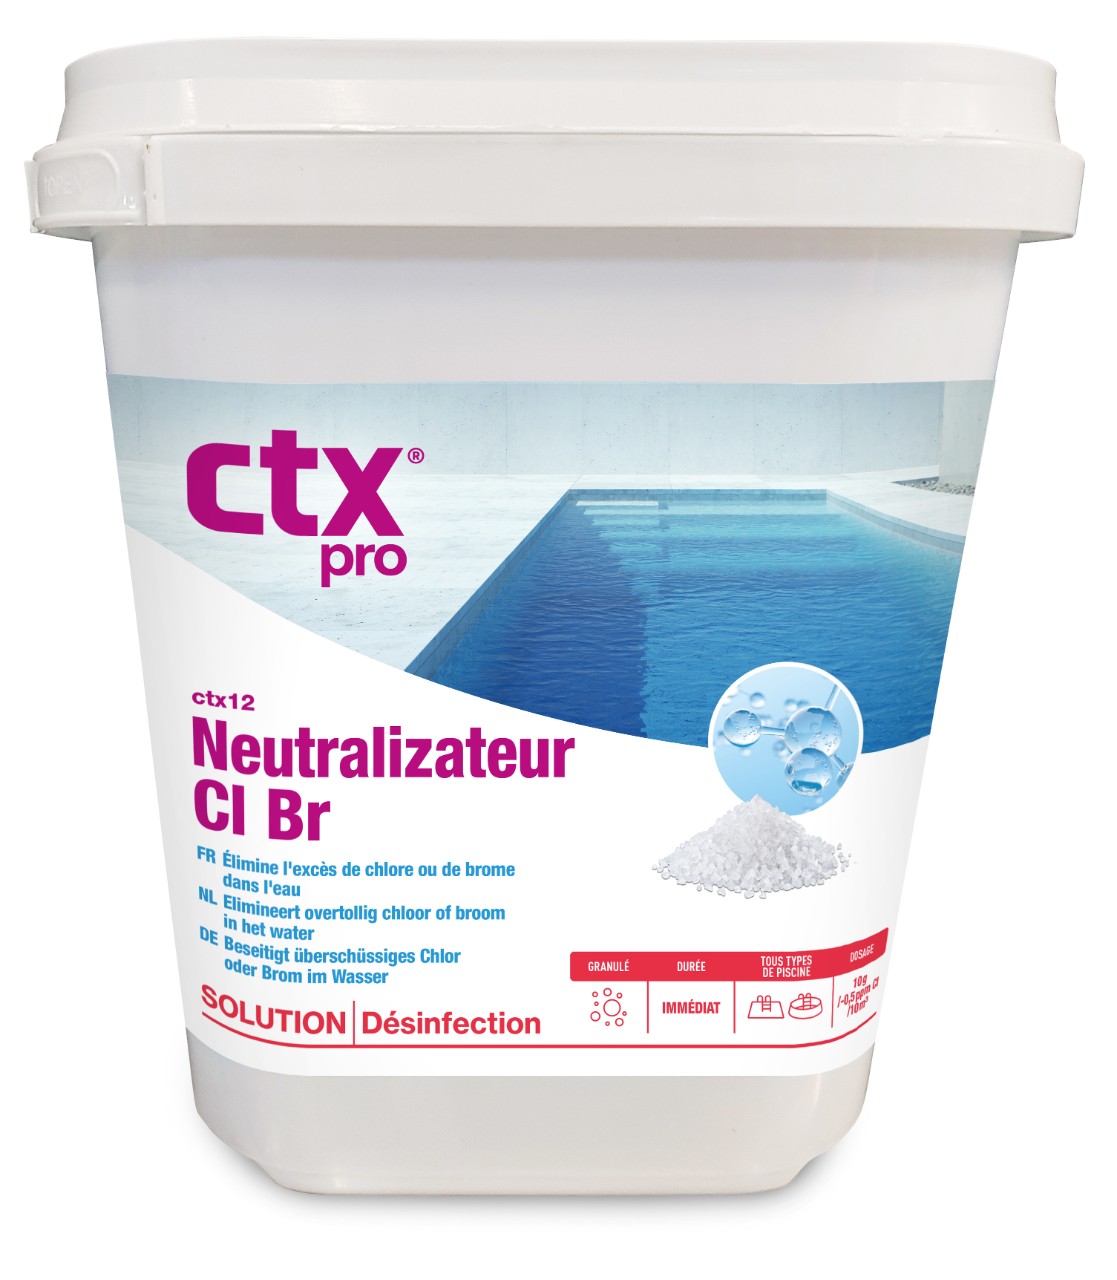 Chlorine neutralizer